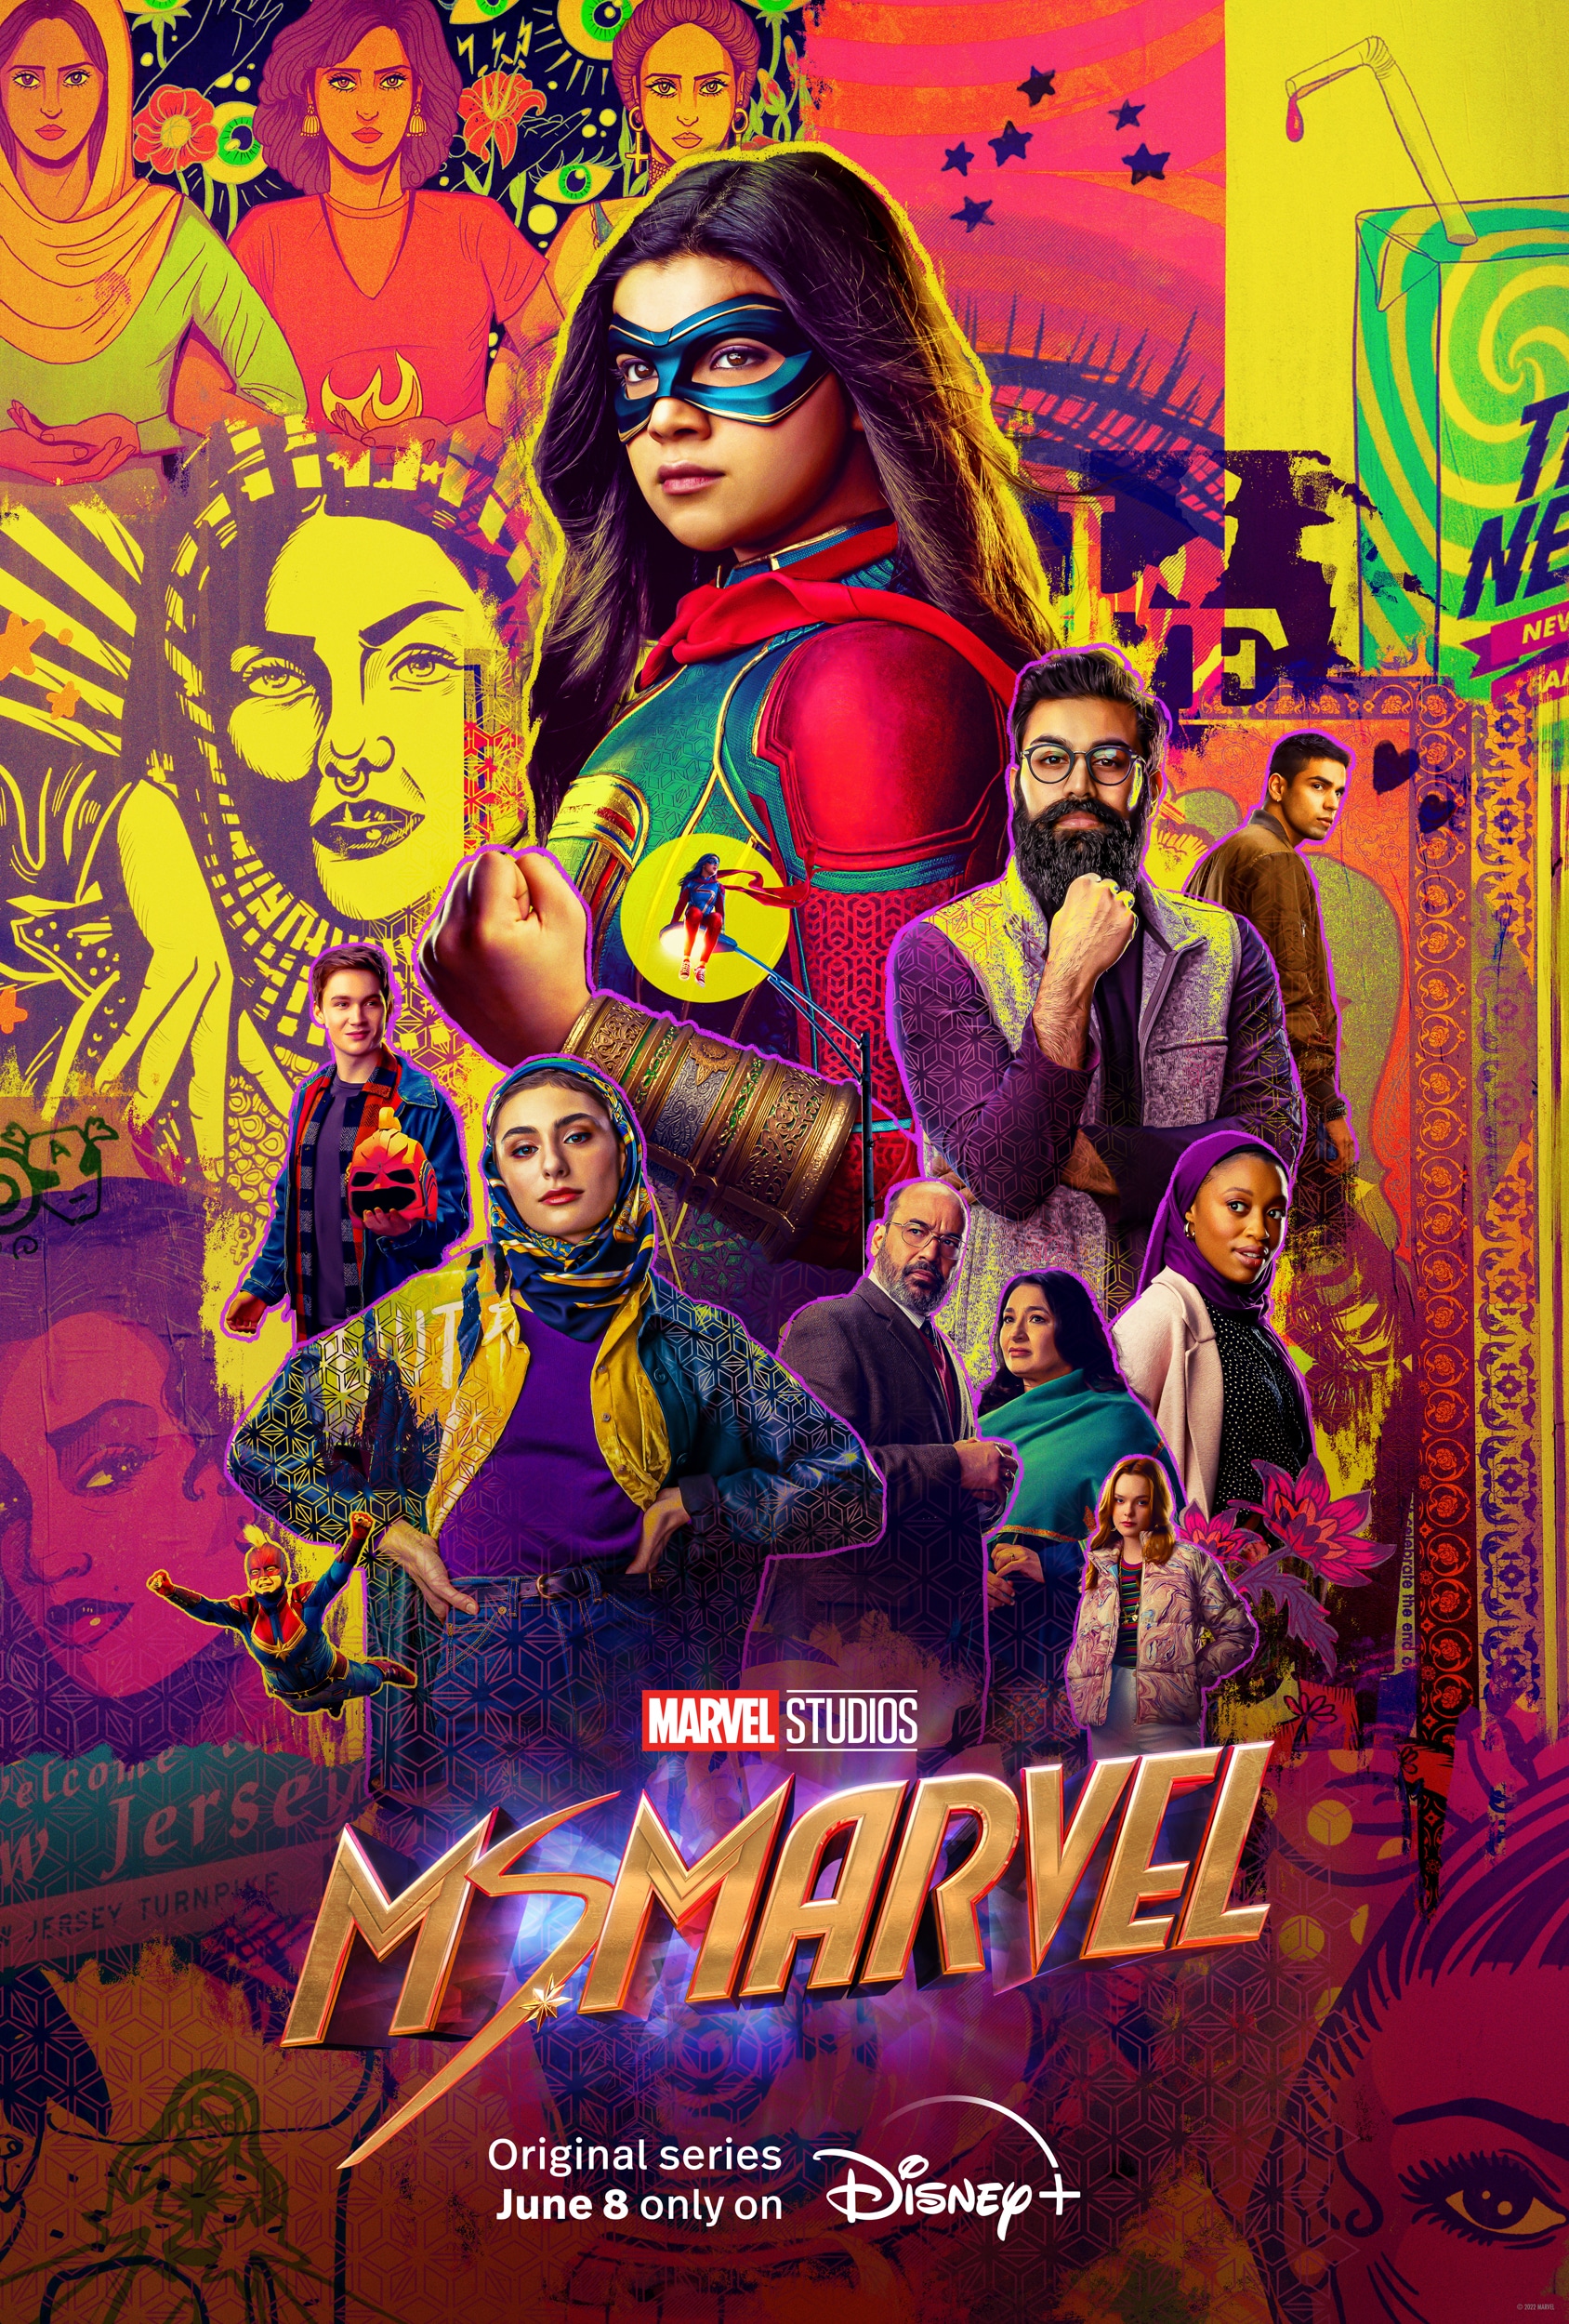 Ms. Marvel, Marvel Cinematic Universe Wiki